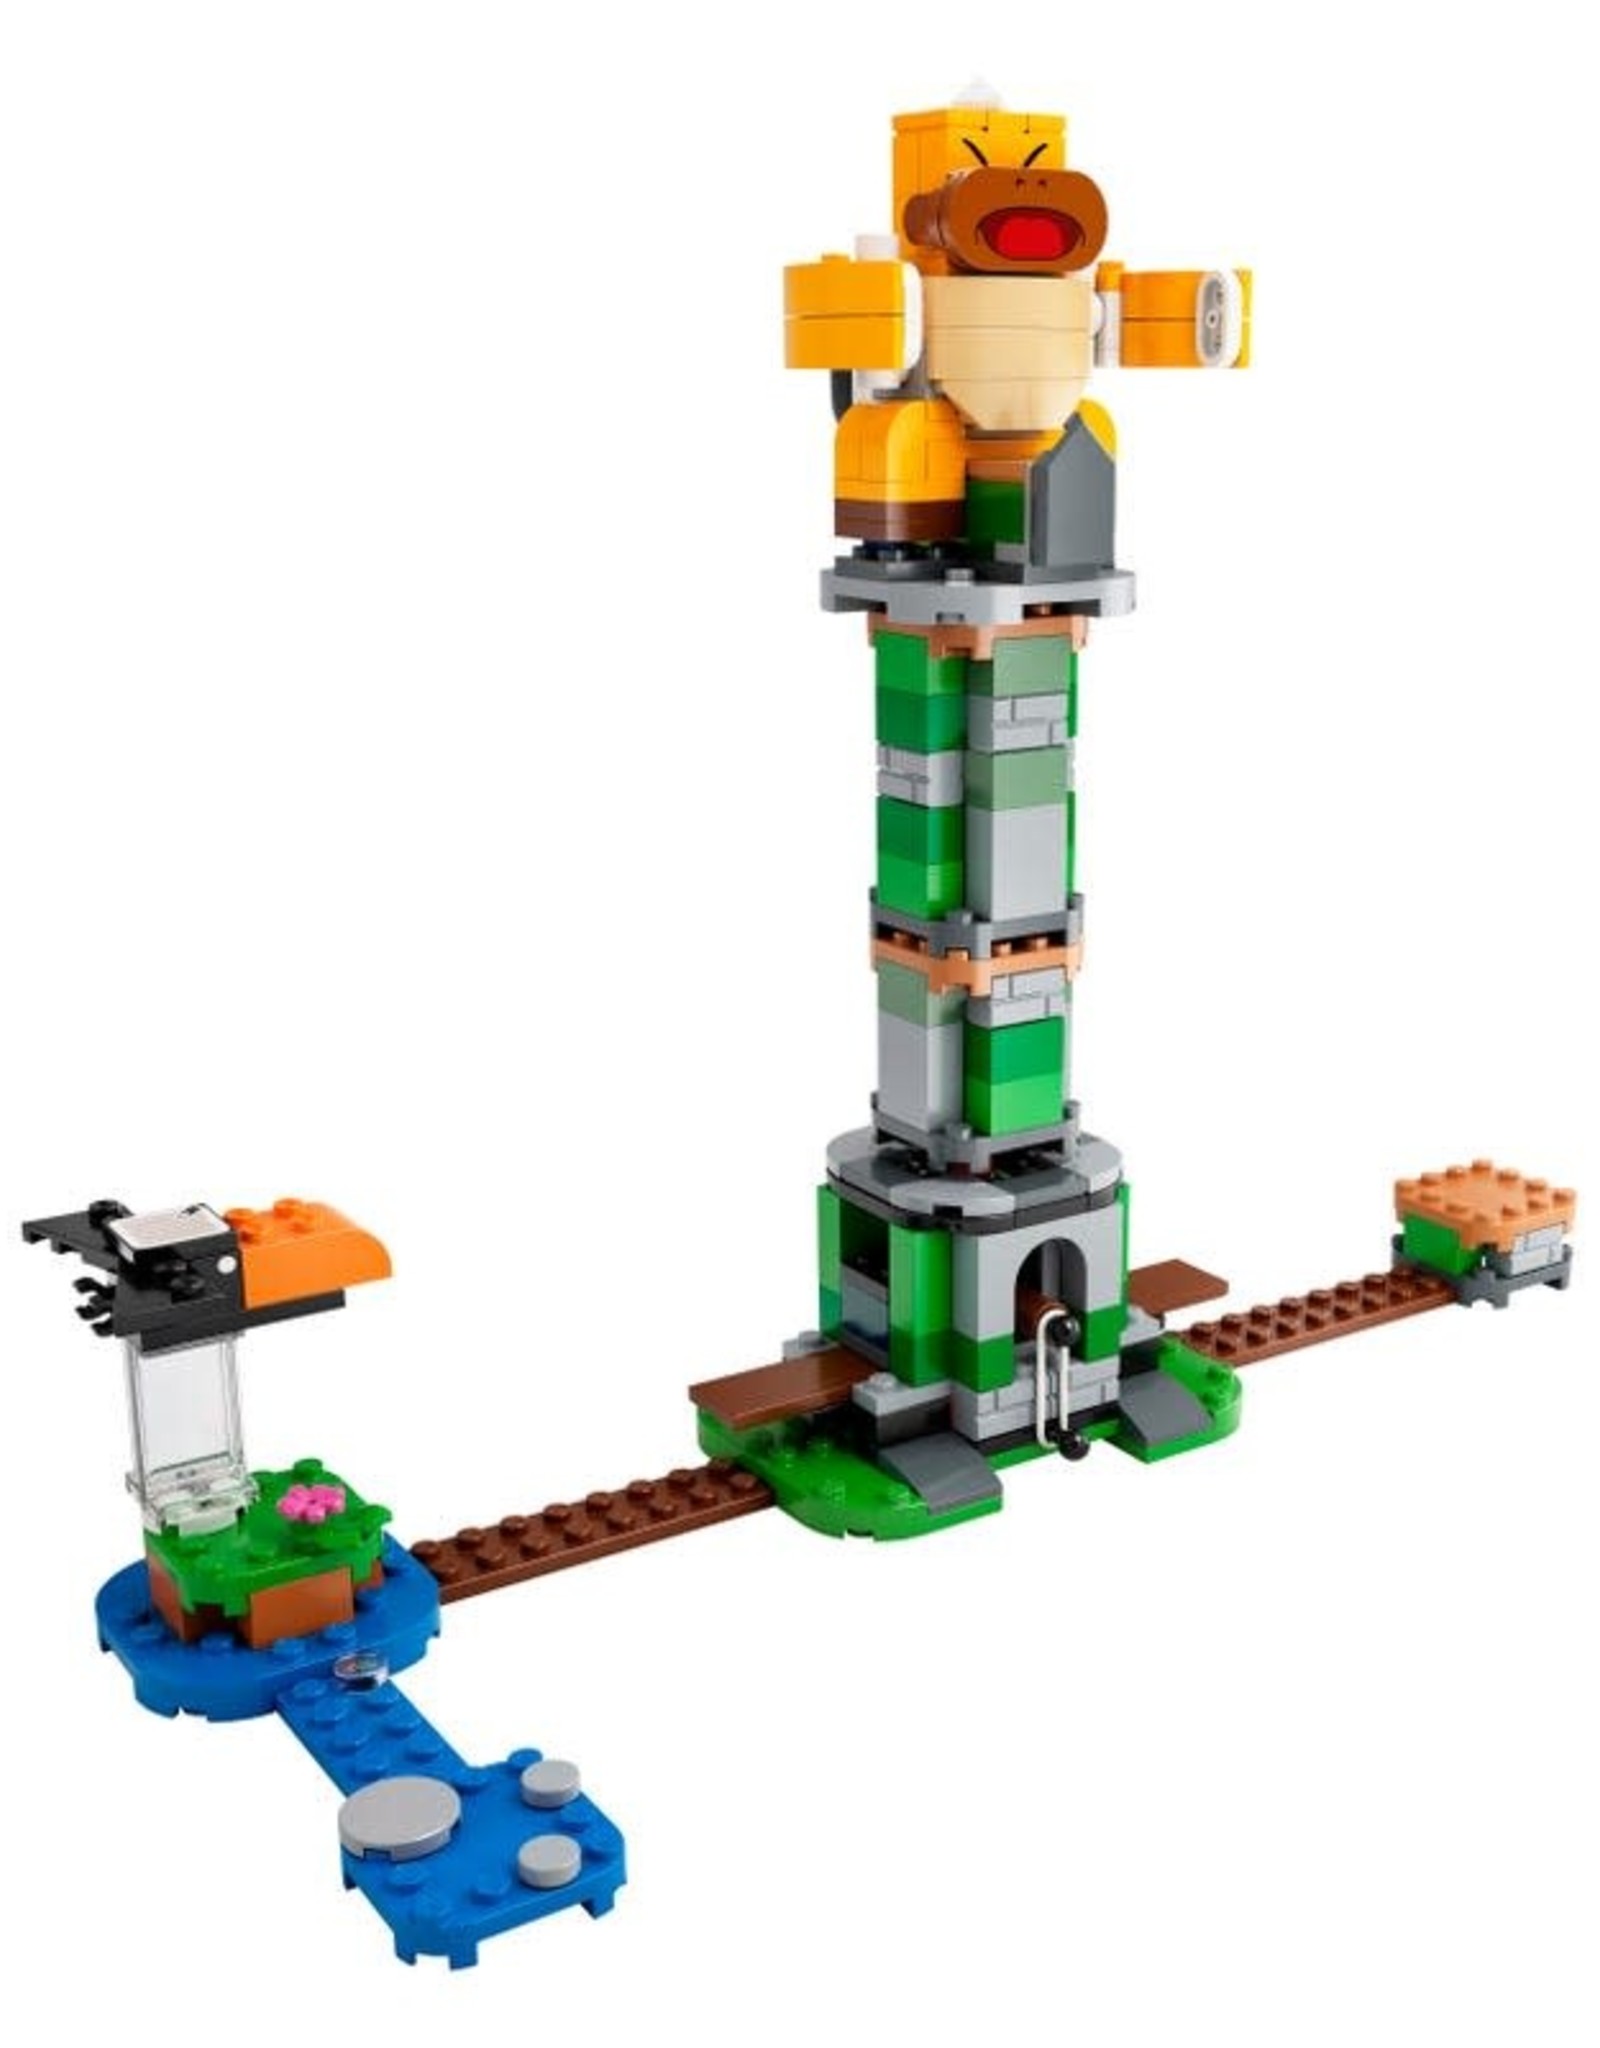 LEGO Classic Lego Super Mario Boss Sumo Bro Topple Tower Expansion